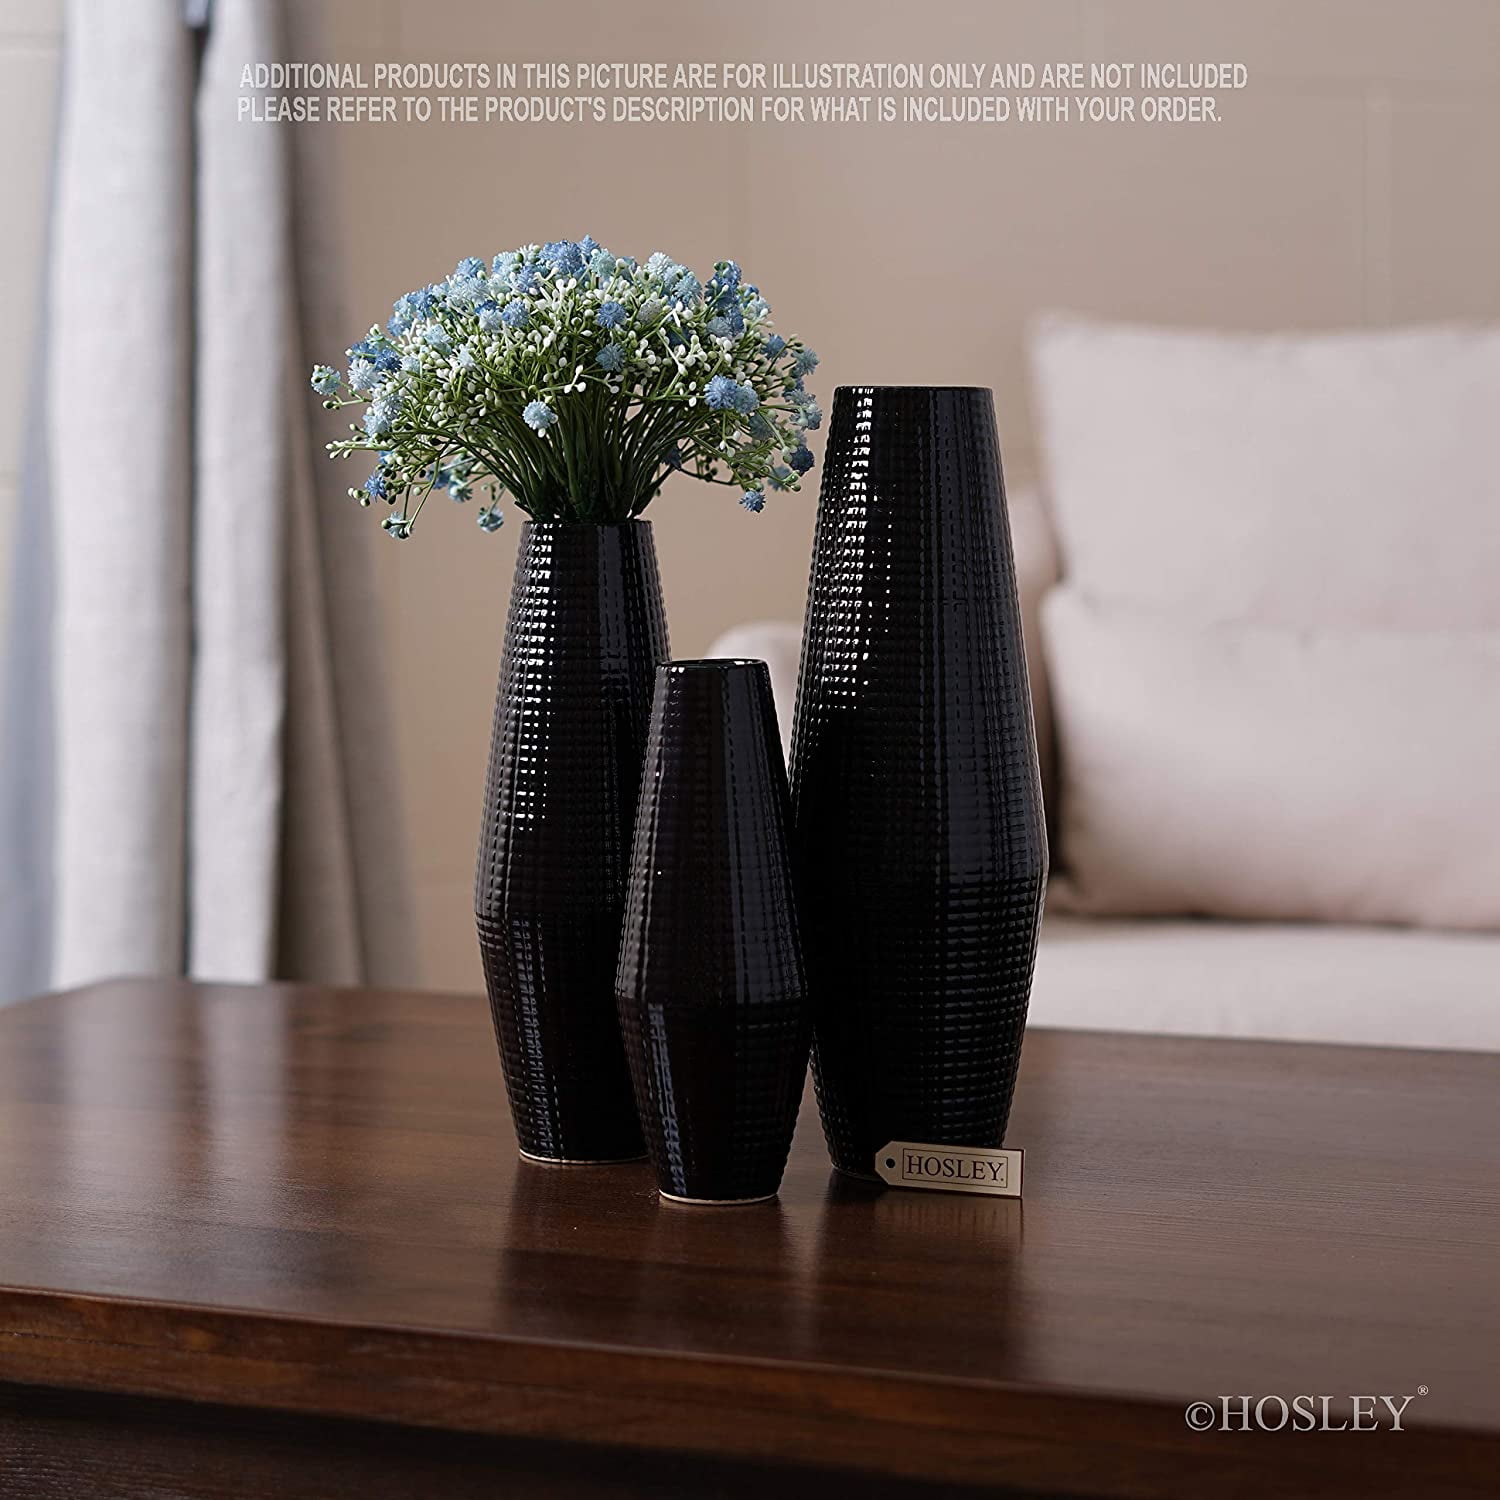 Spa Home 8inch White Solid Ceramic Floor Vase Flower Vase for Party Wedding 